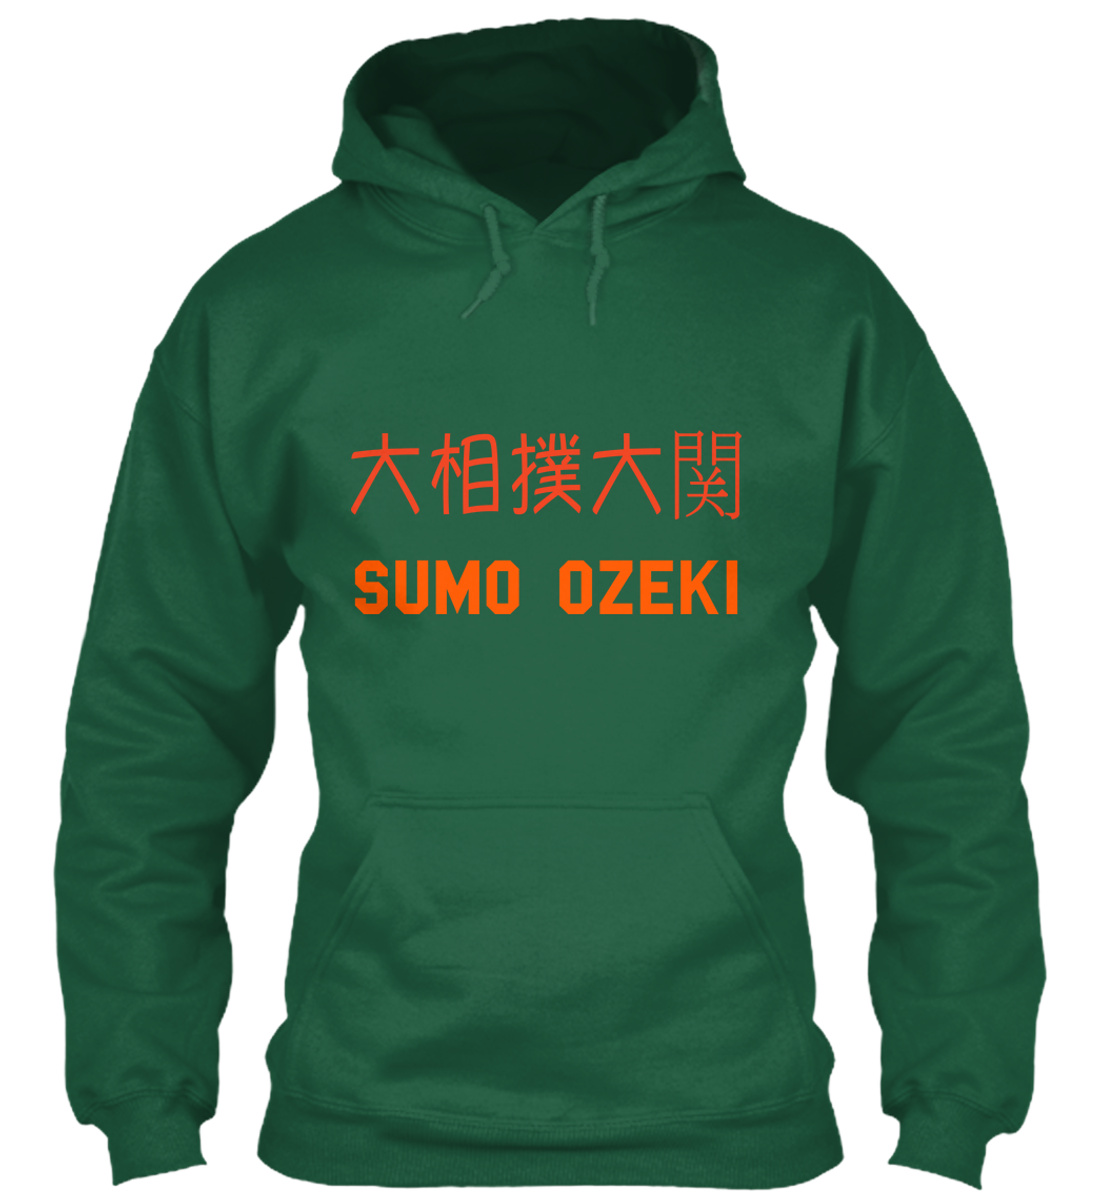 Ozeki SUMO shirt (front only) | Jason's Sumo shirts